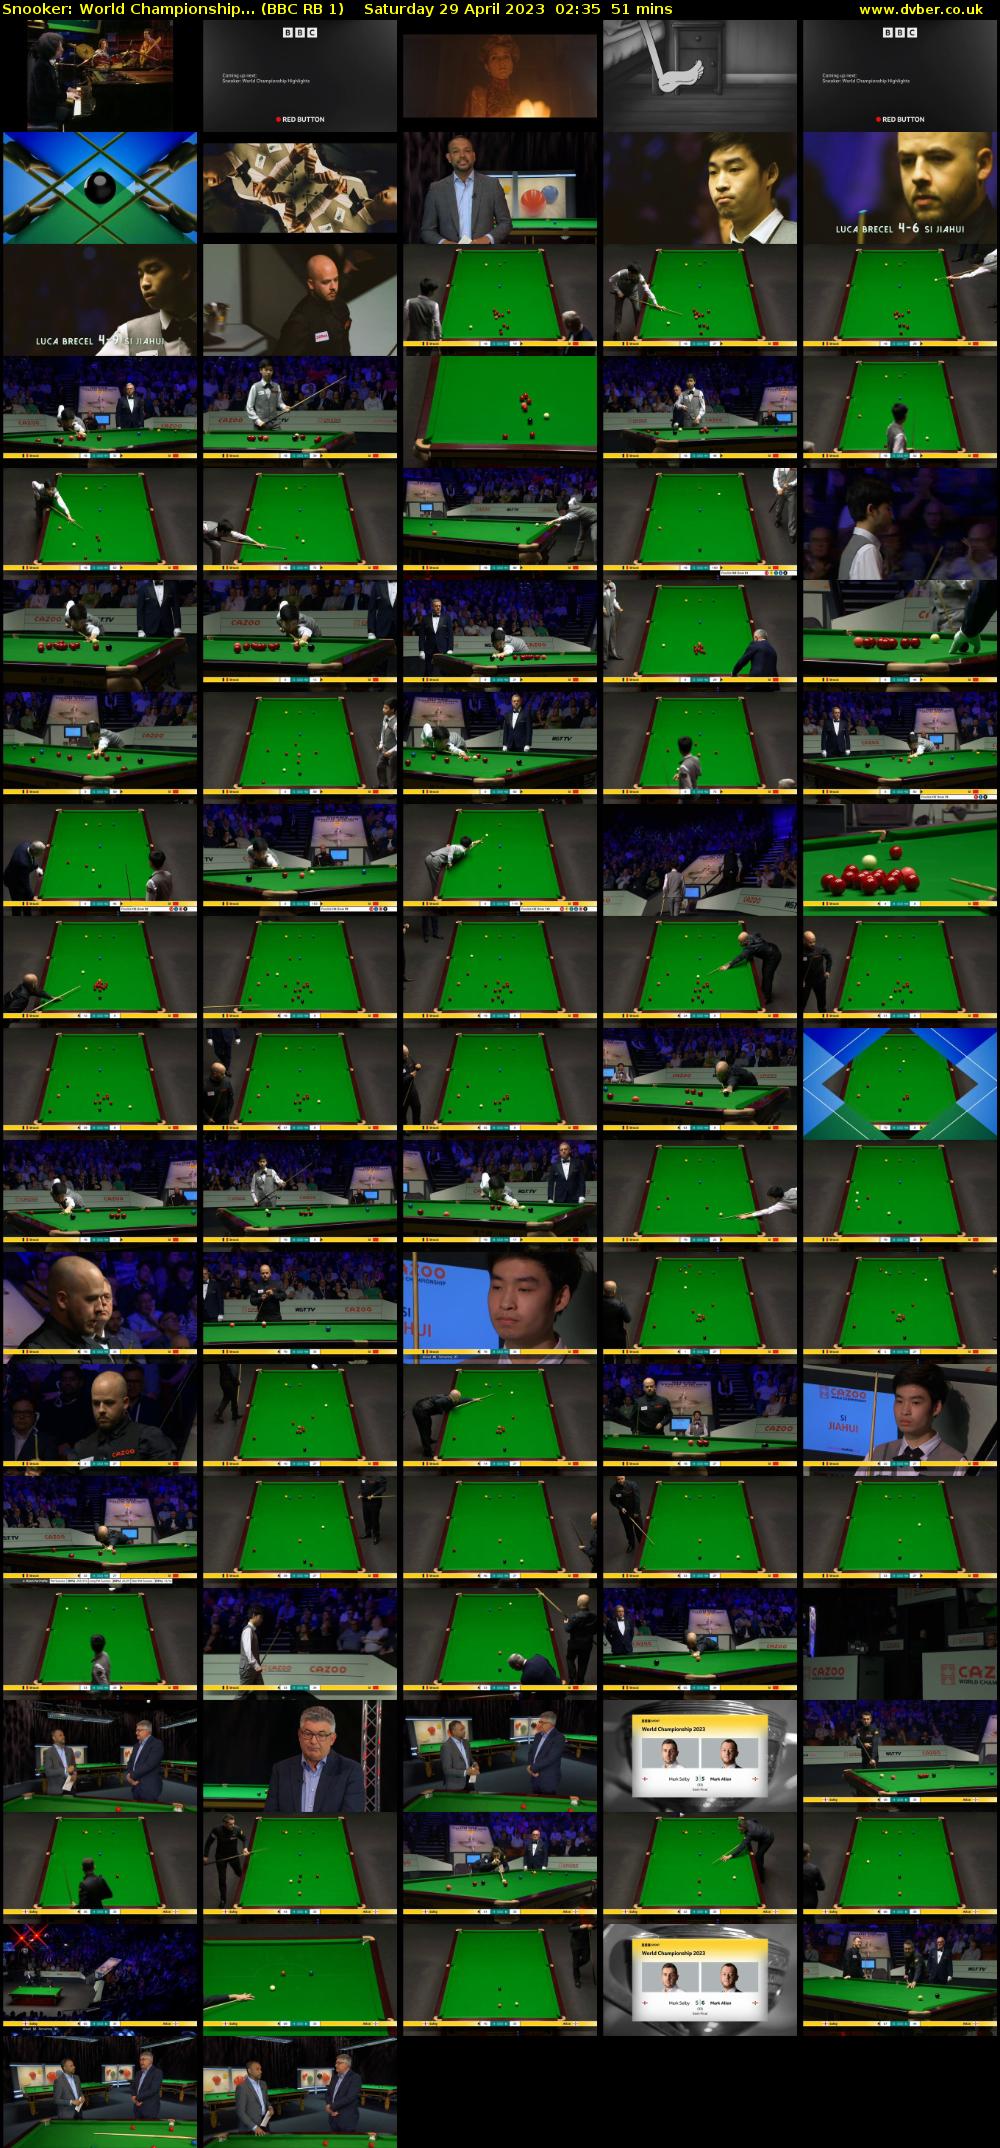 Snooker: World Championship... (BBC RB 1) Saturday 29 April 2023 02:35 - 03:26